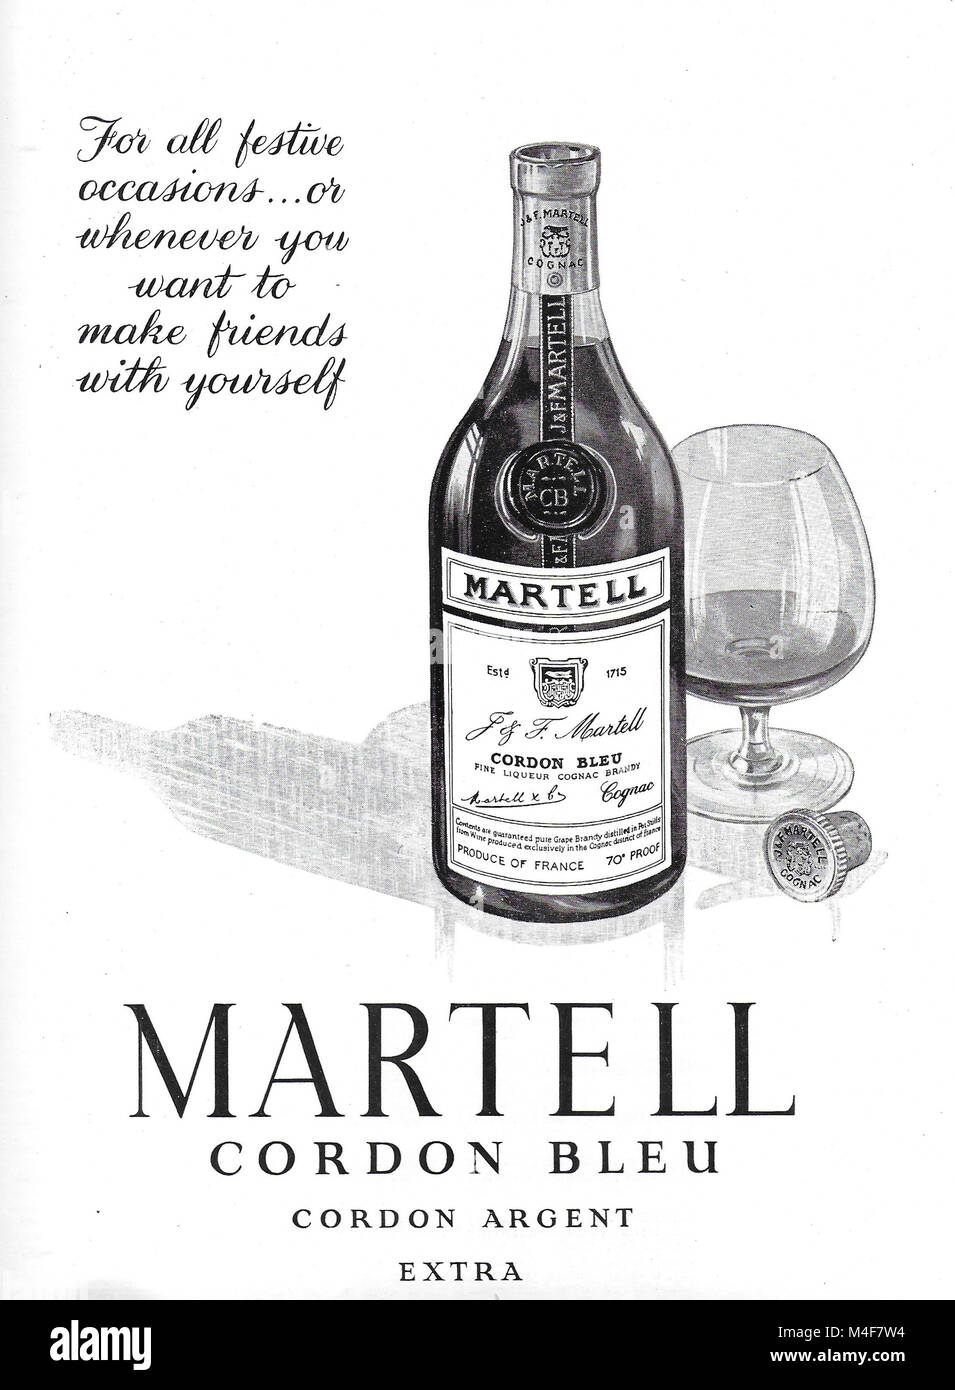 Martell cordon bleu beber brandy anuncios, publicidad en Country Life  magazine UK 1951 Fotografía de stock - Alamy